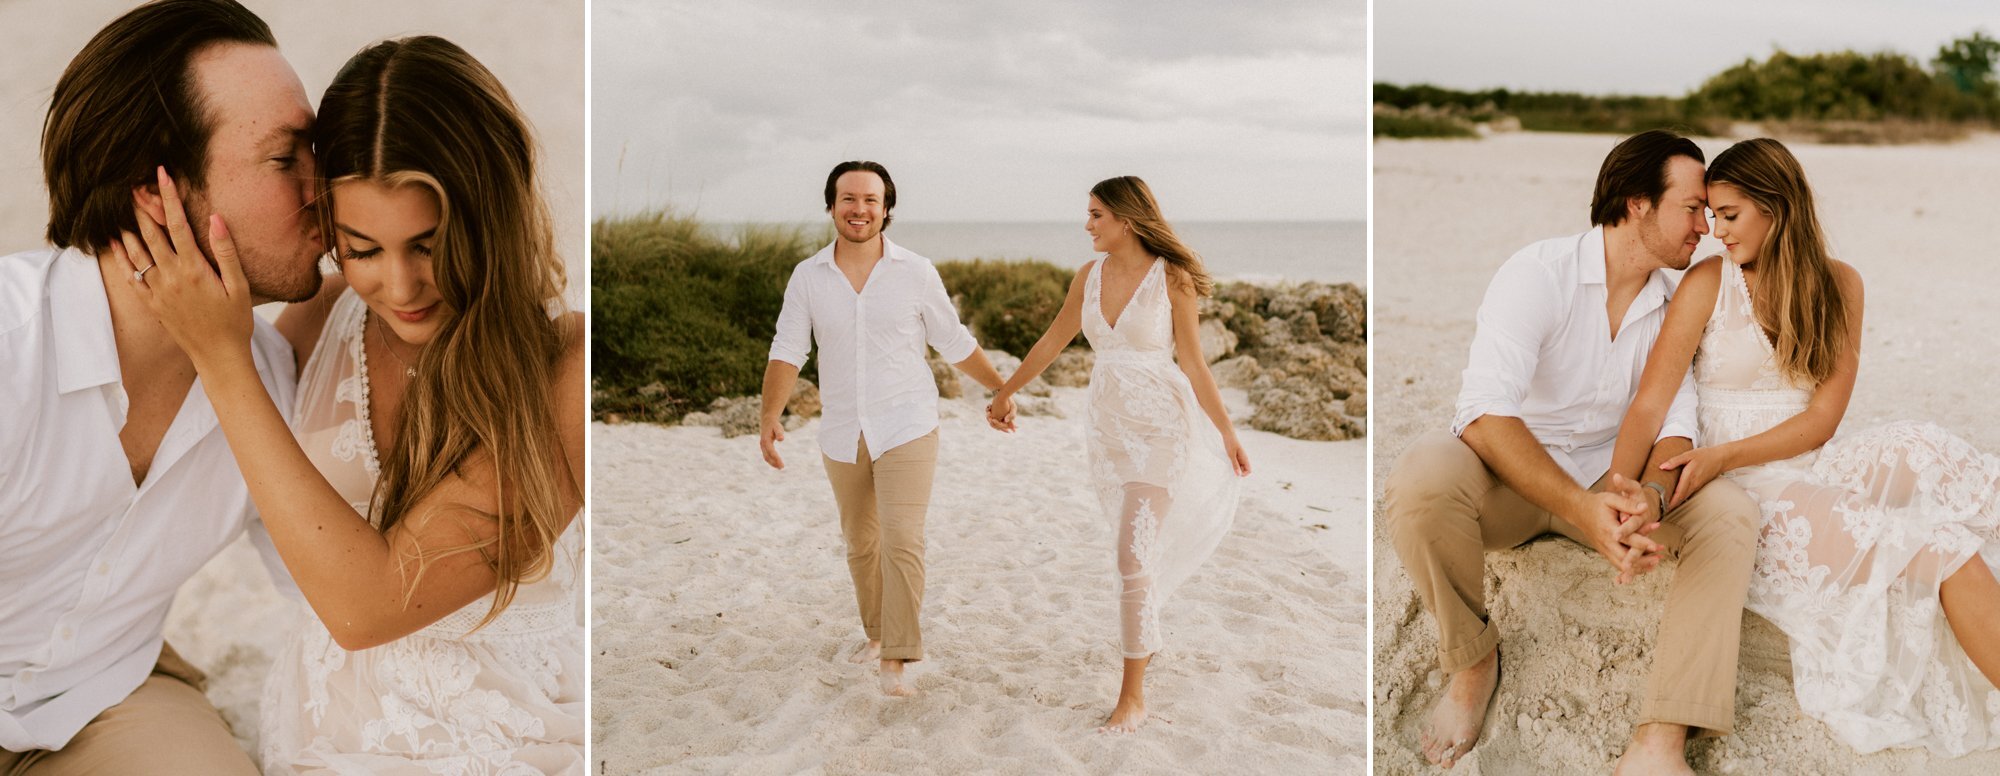 Naples Florida Beach Engagement Photos- Michelle Gonzalez Photography - Brooke and David-42.jpg